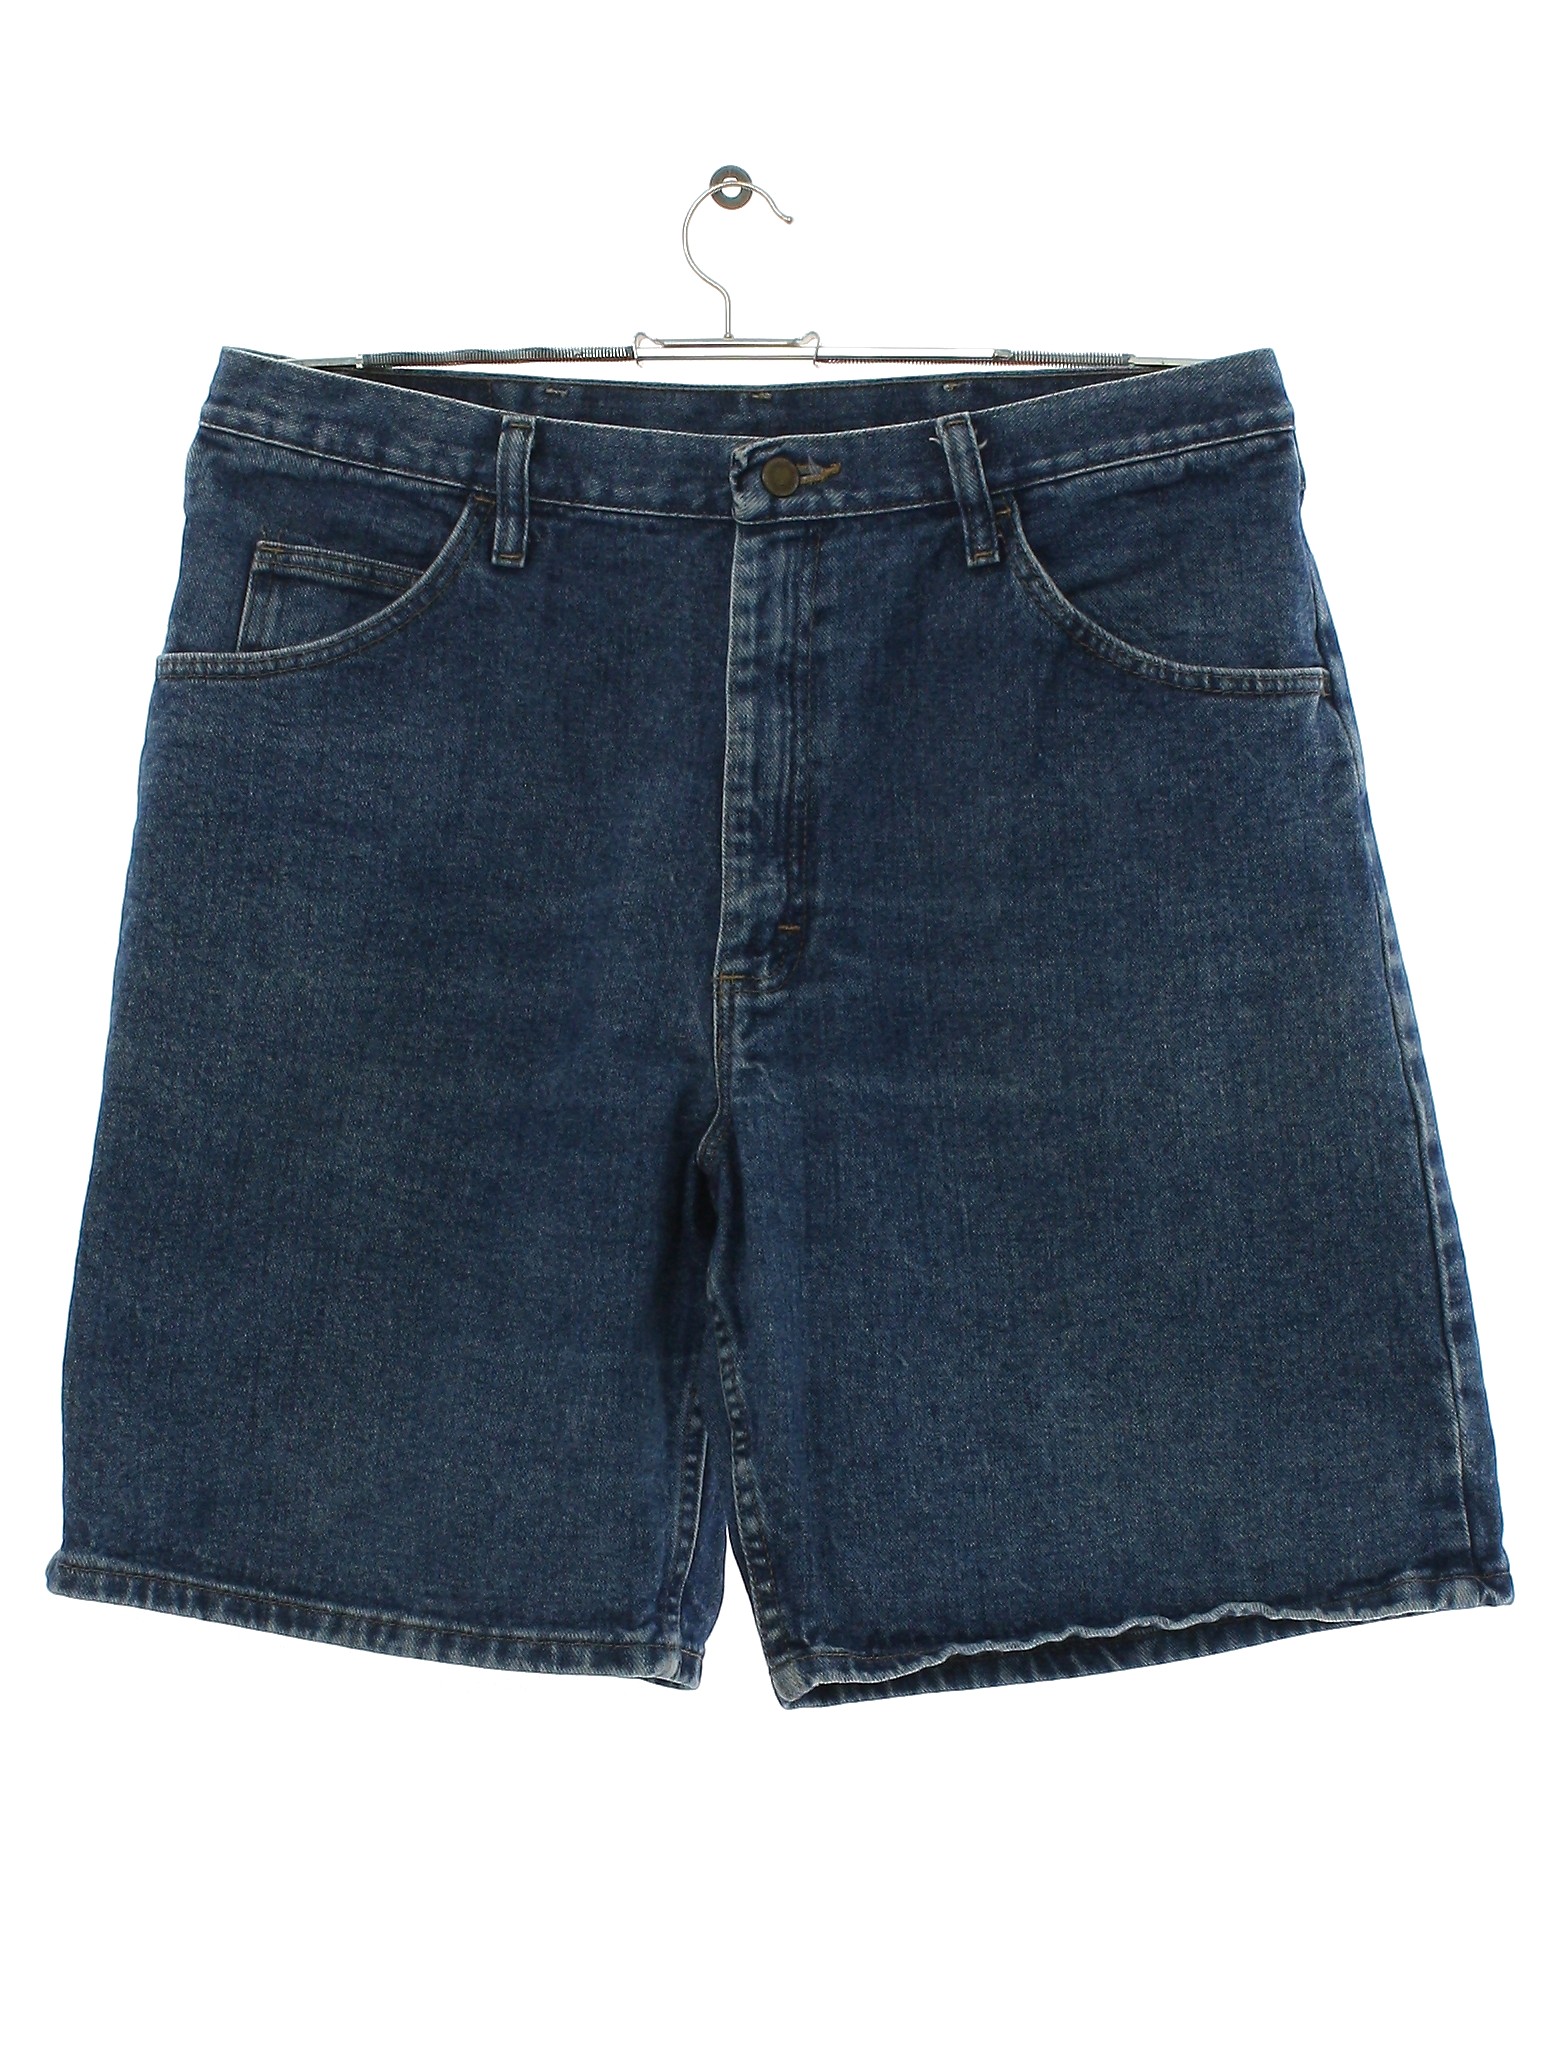 Retro Nineties Shorts: 90s -Wrangler, Made in Mexico- Mens dark blue ...